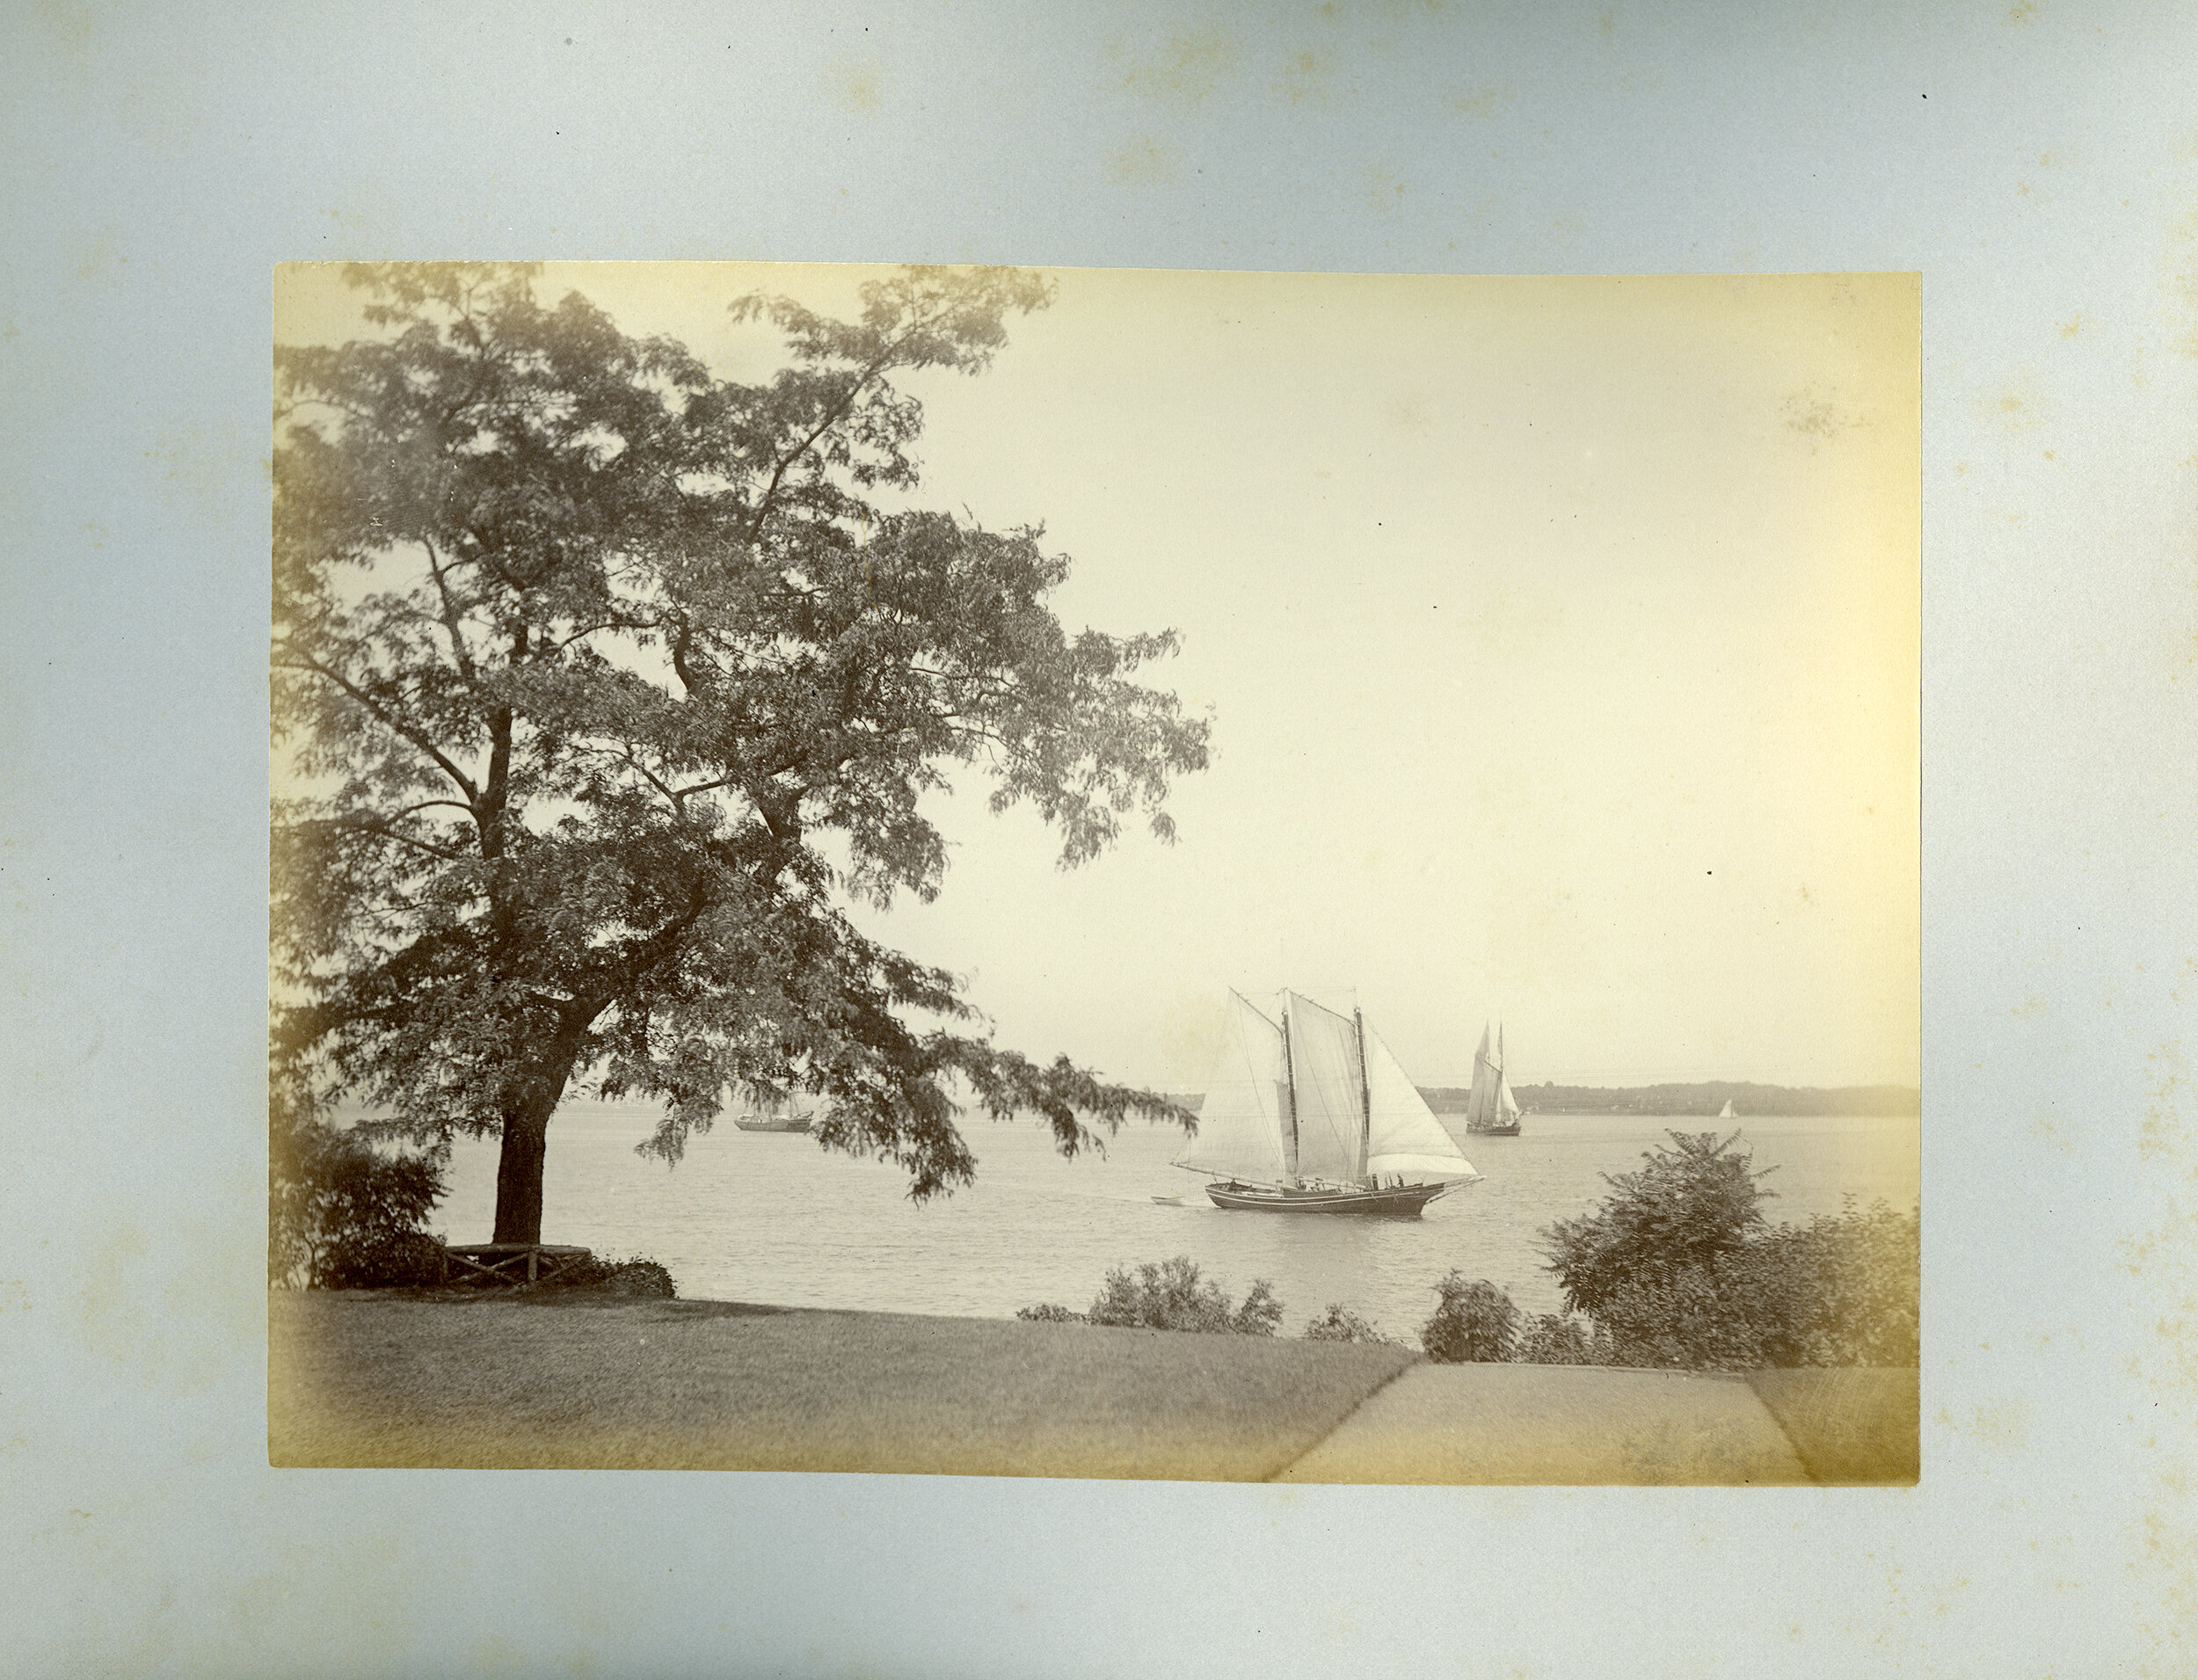   View from front door, tree &amp; schooner, August 8, 1887  Collection of Historic Richmond Town, 50.015.7535.014 